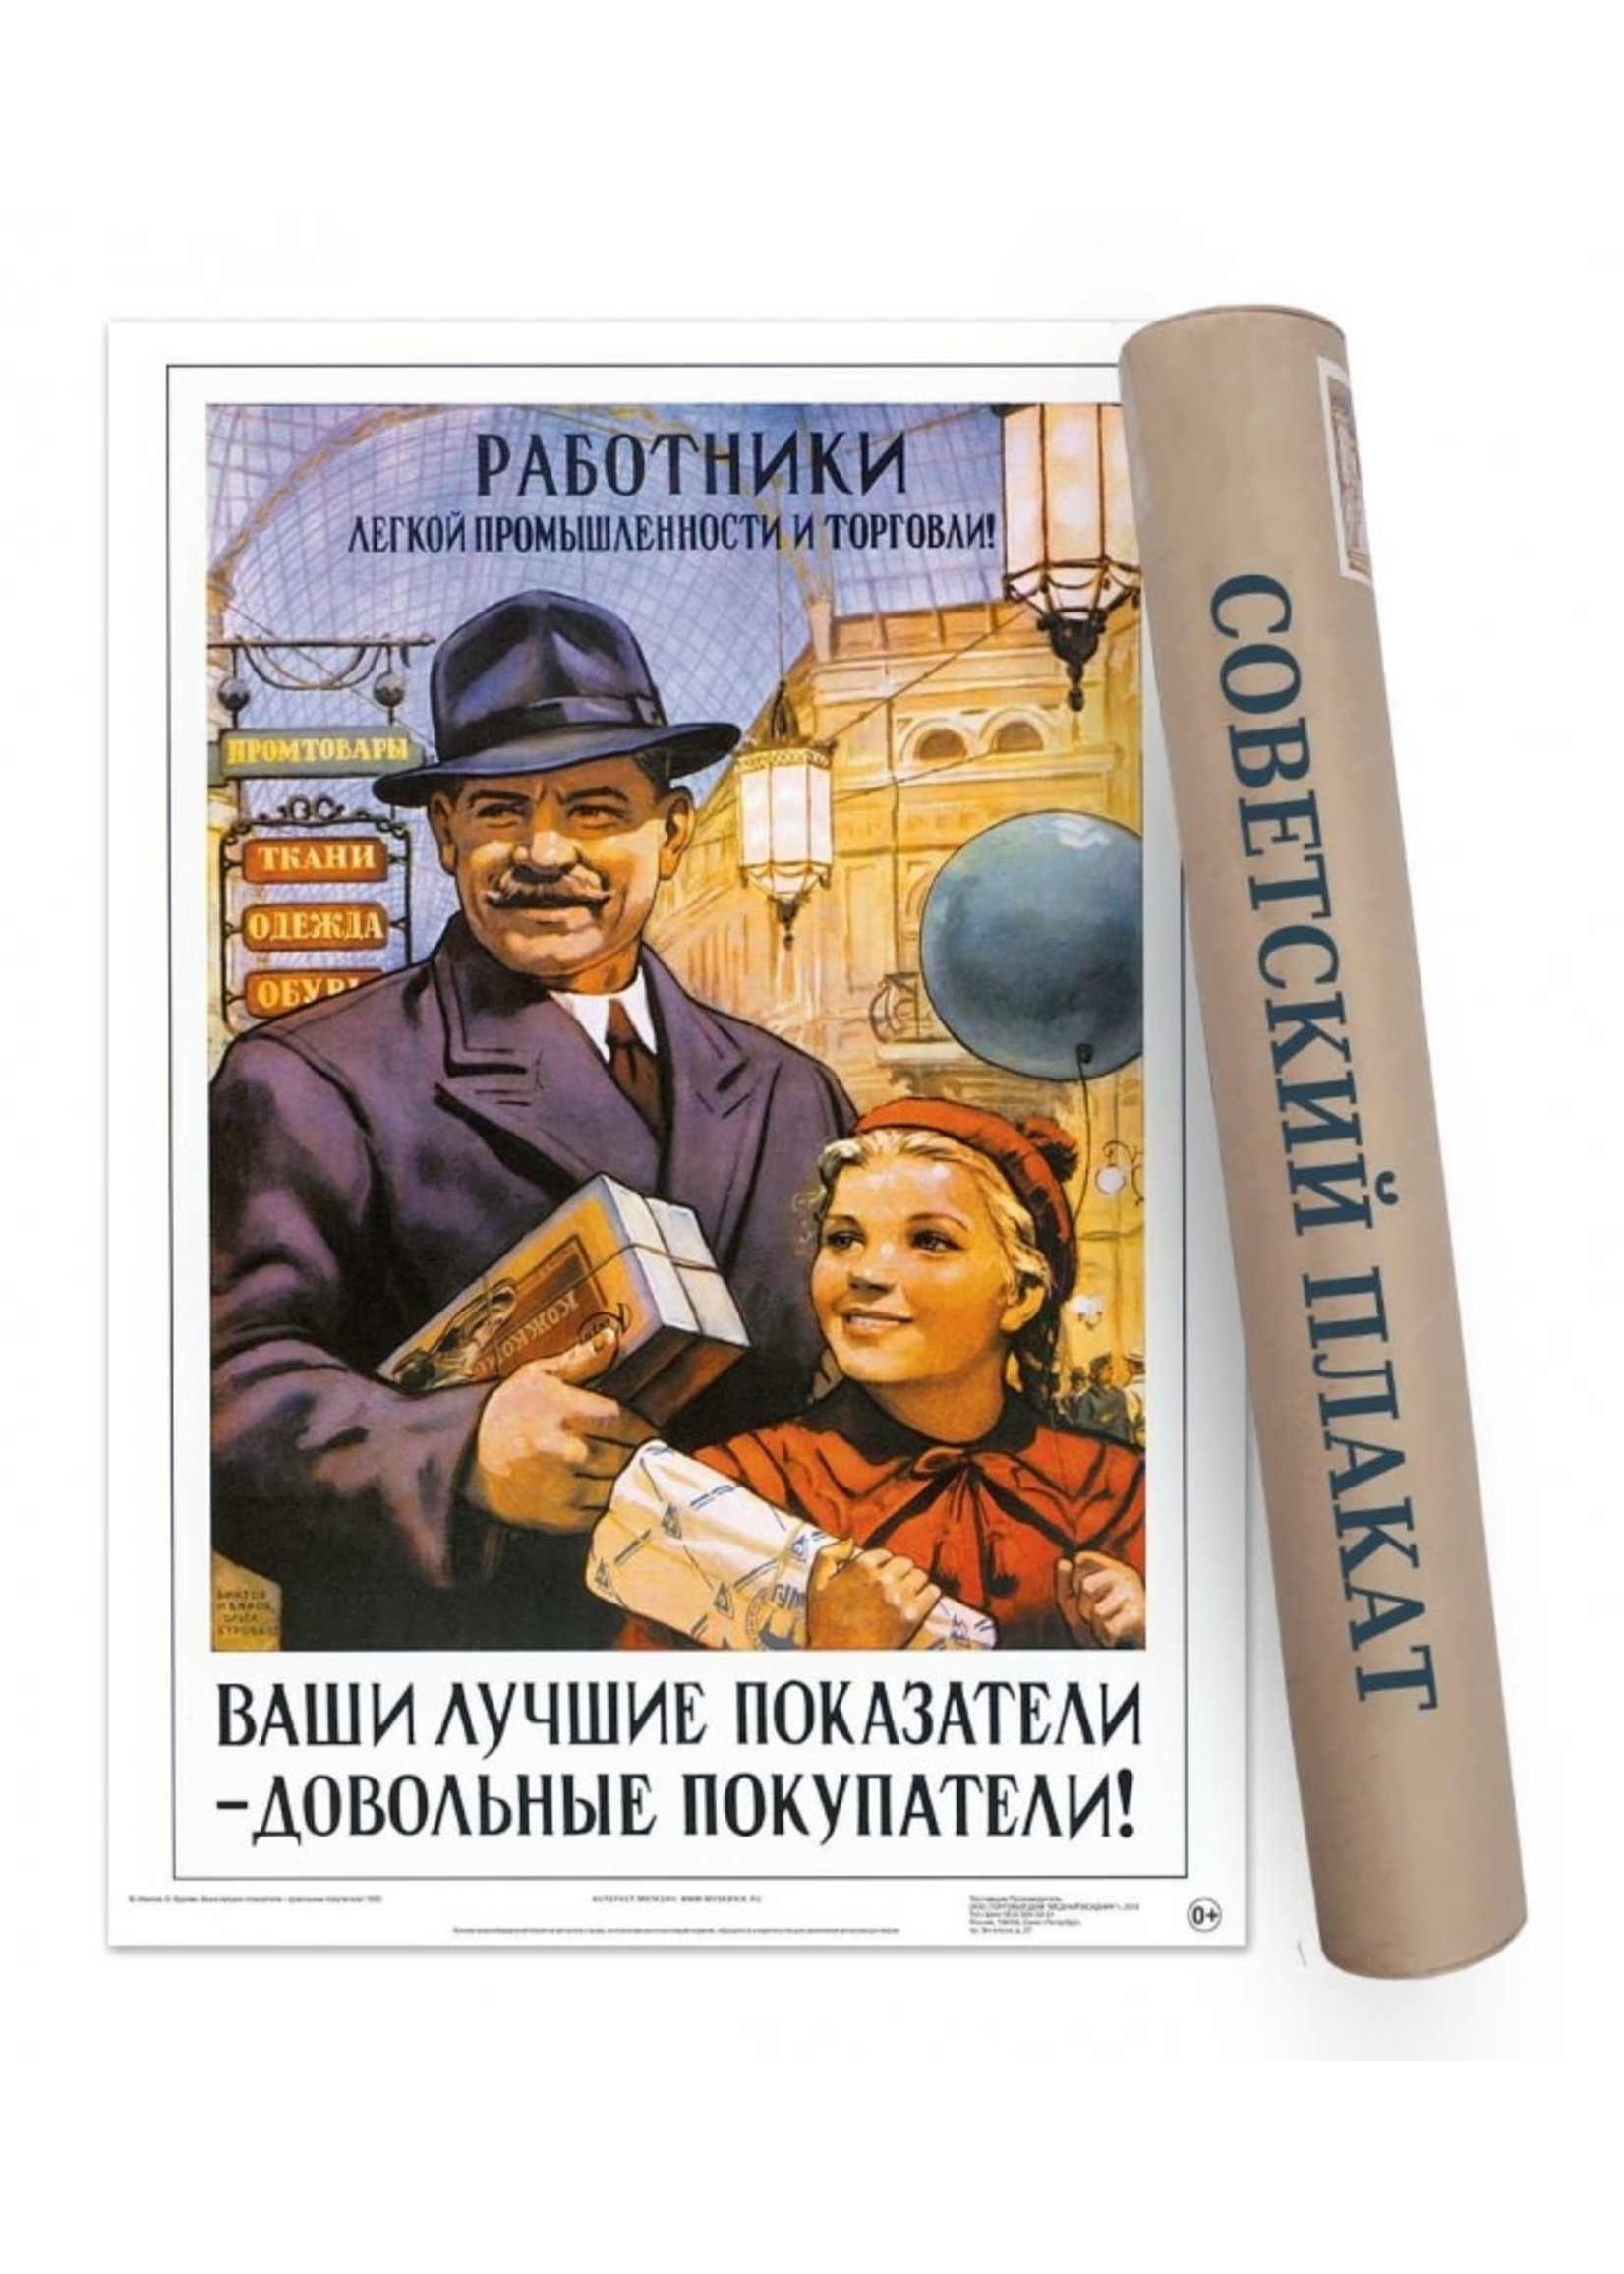 SALE: USSR Poster, Работники